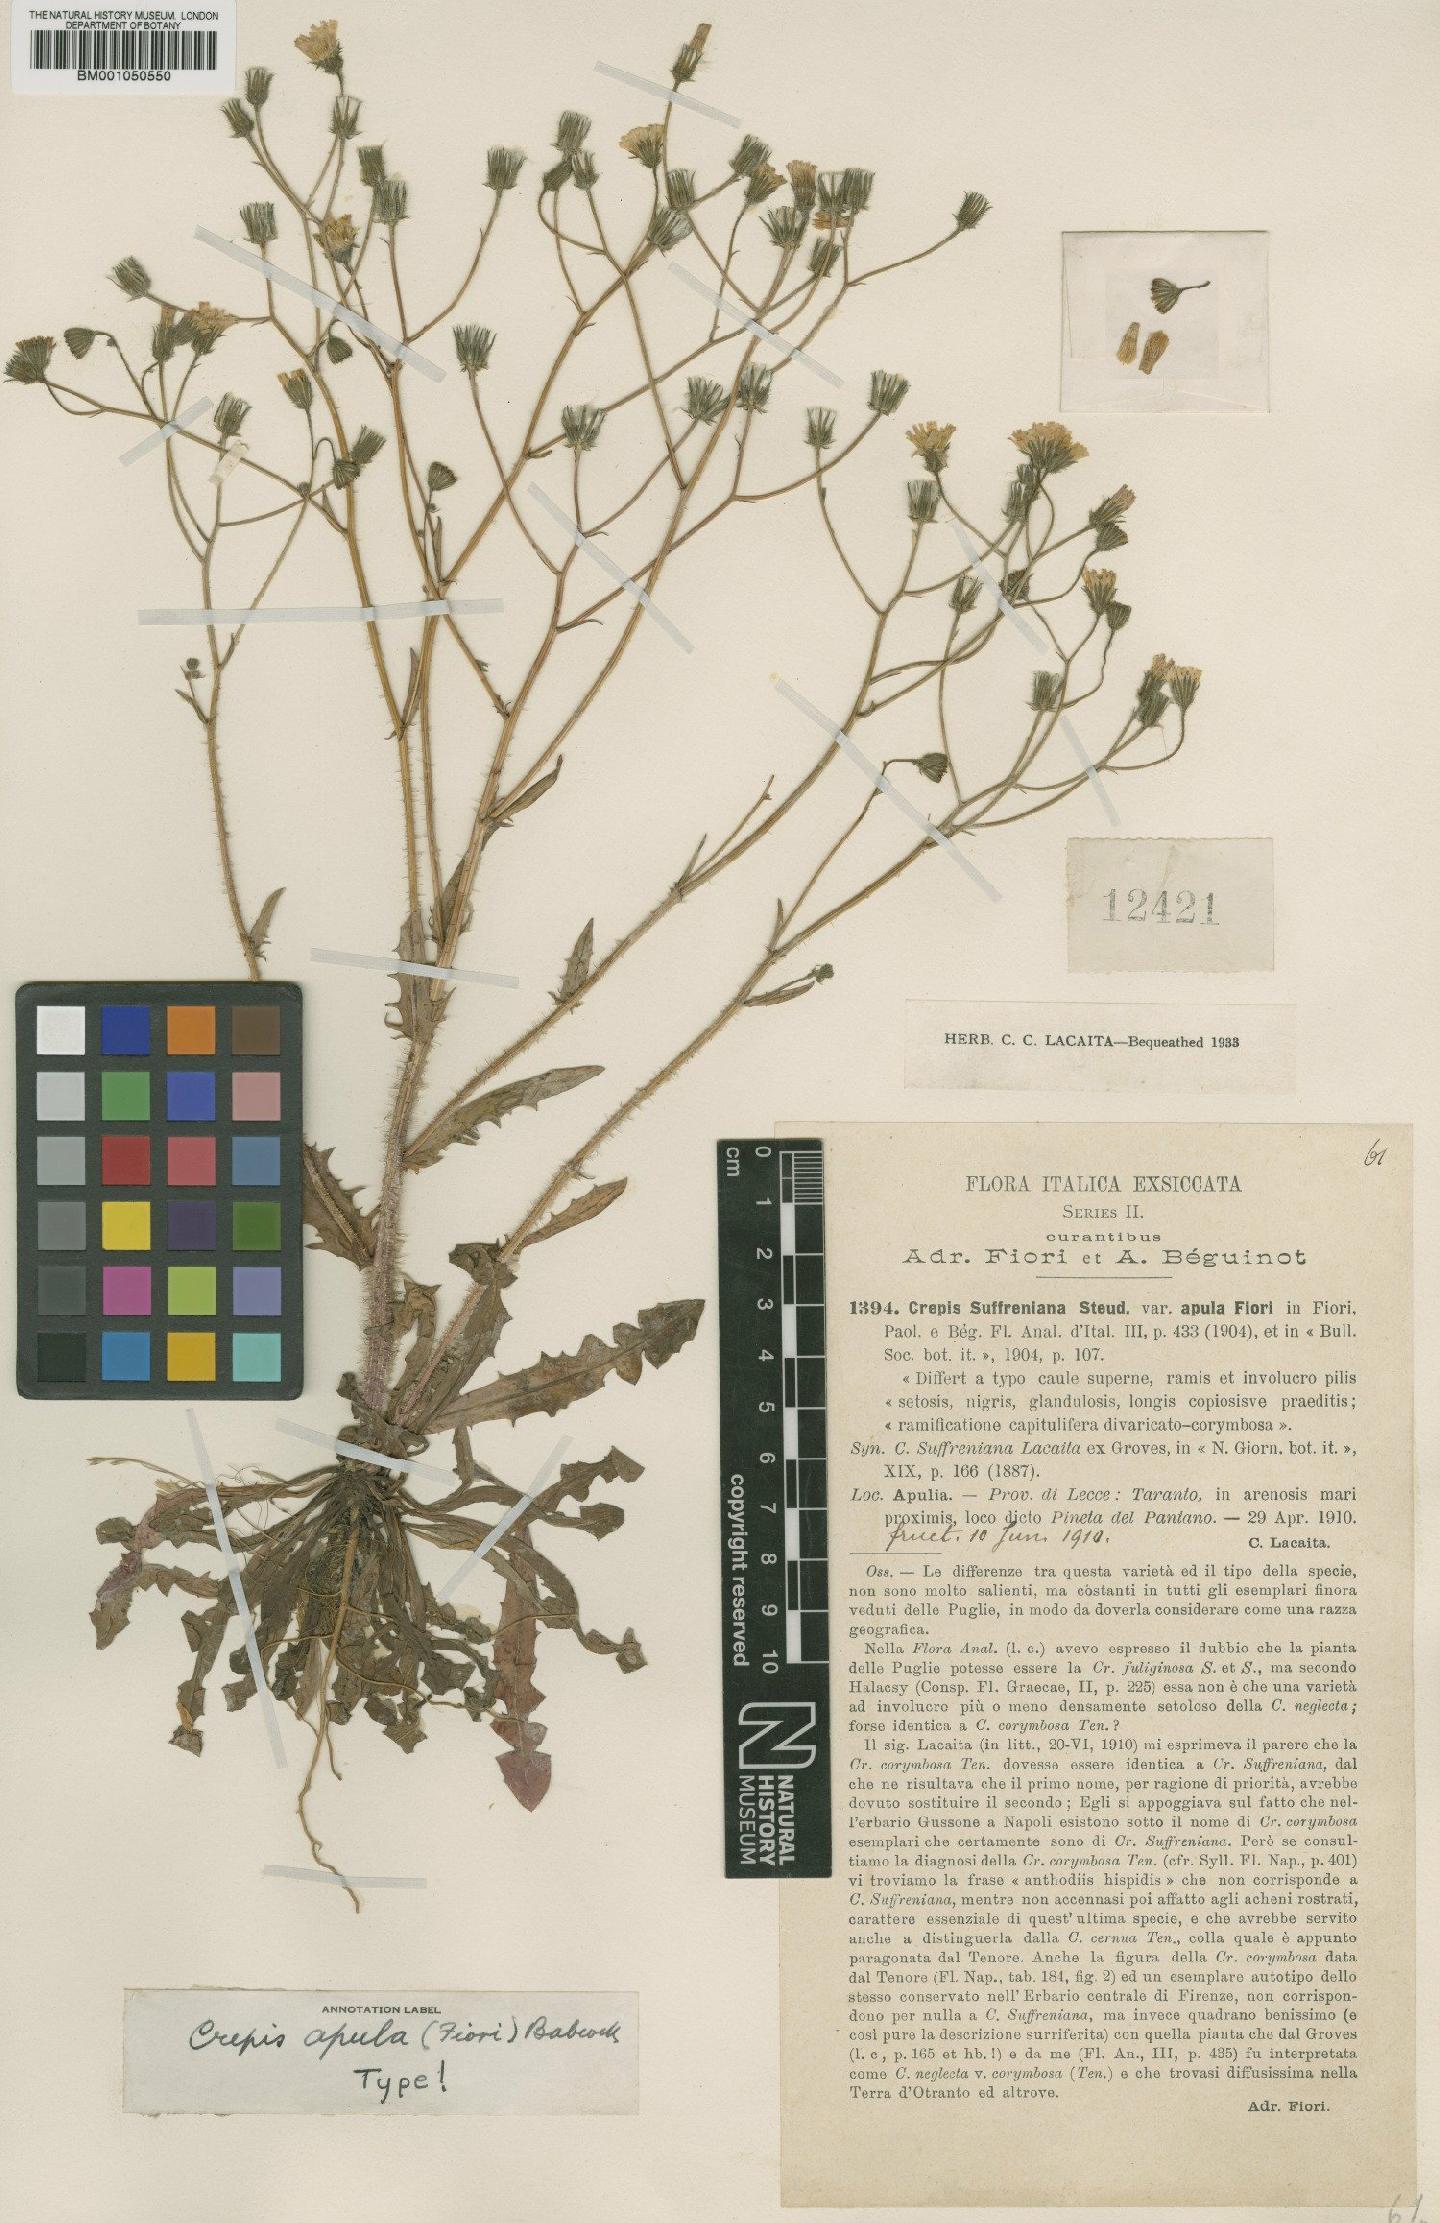 To NHMUK collection (Crepis suffreniana subsp. apula (Fiori) P.D.Sell; Type; NHMUK:ecatalogue:2395611)